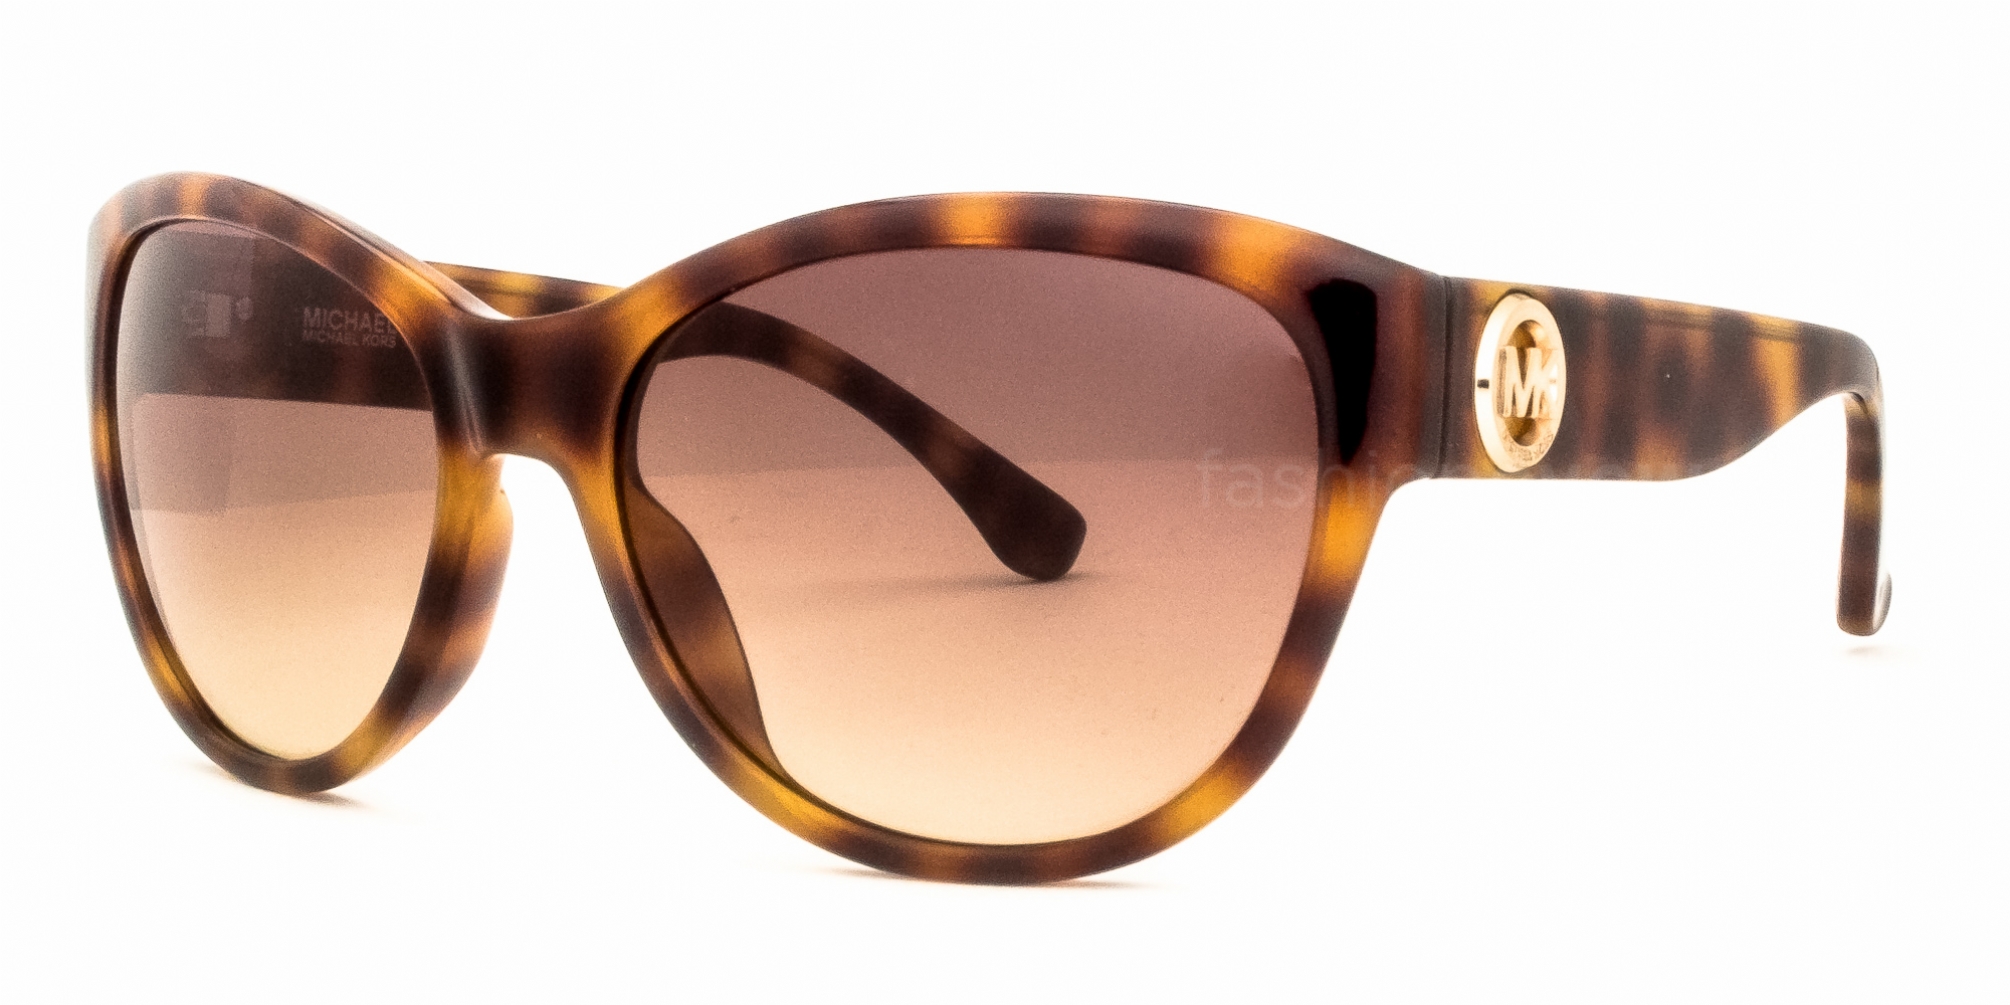 Michael Kors Vivian 2892s Sunglasses